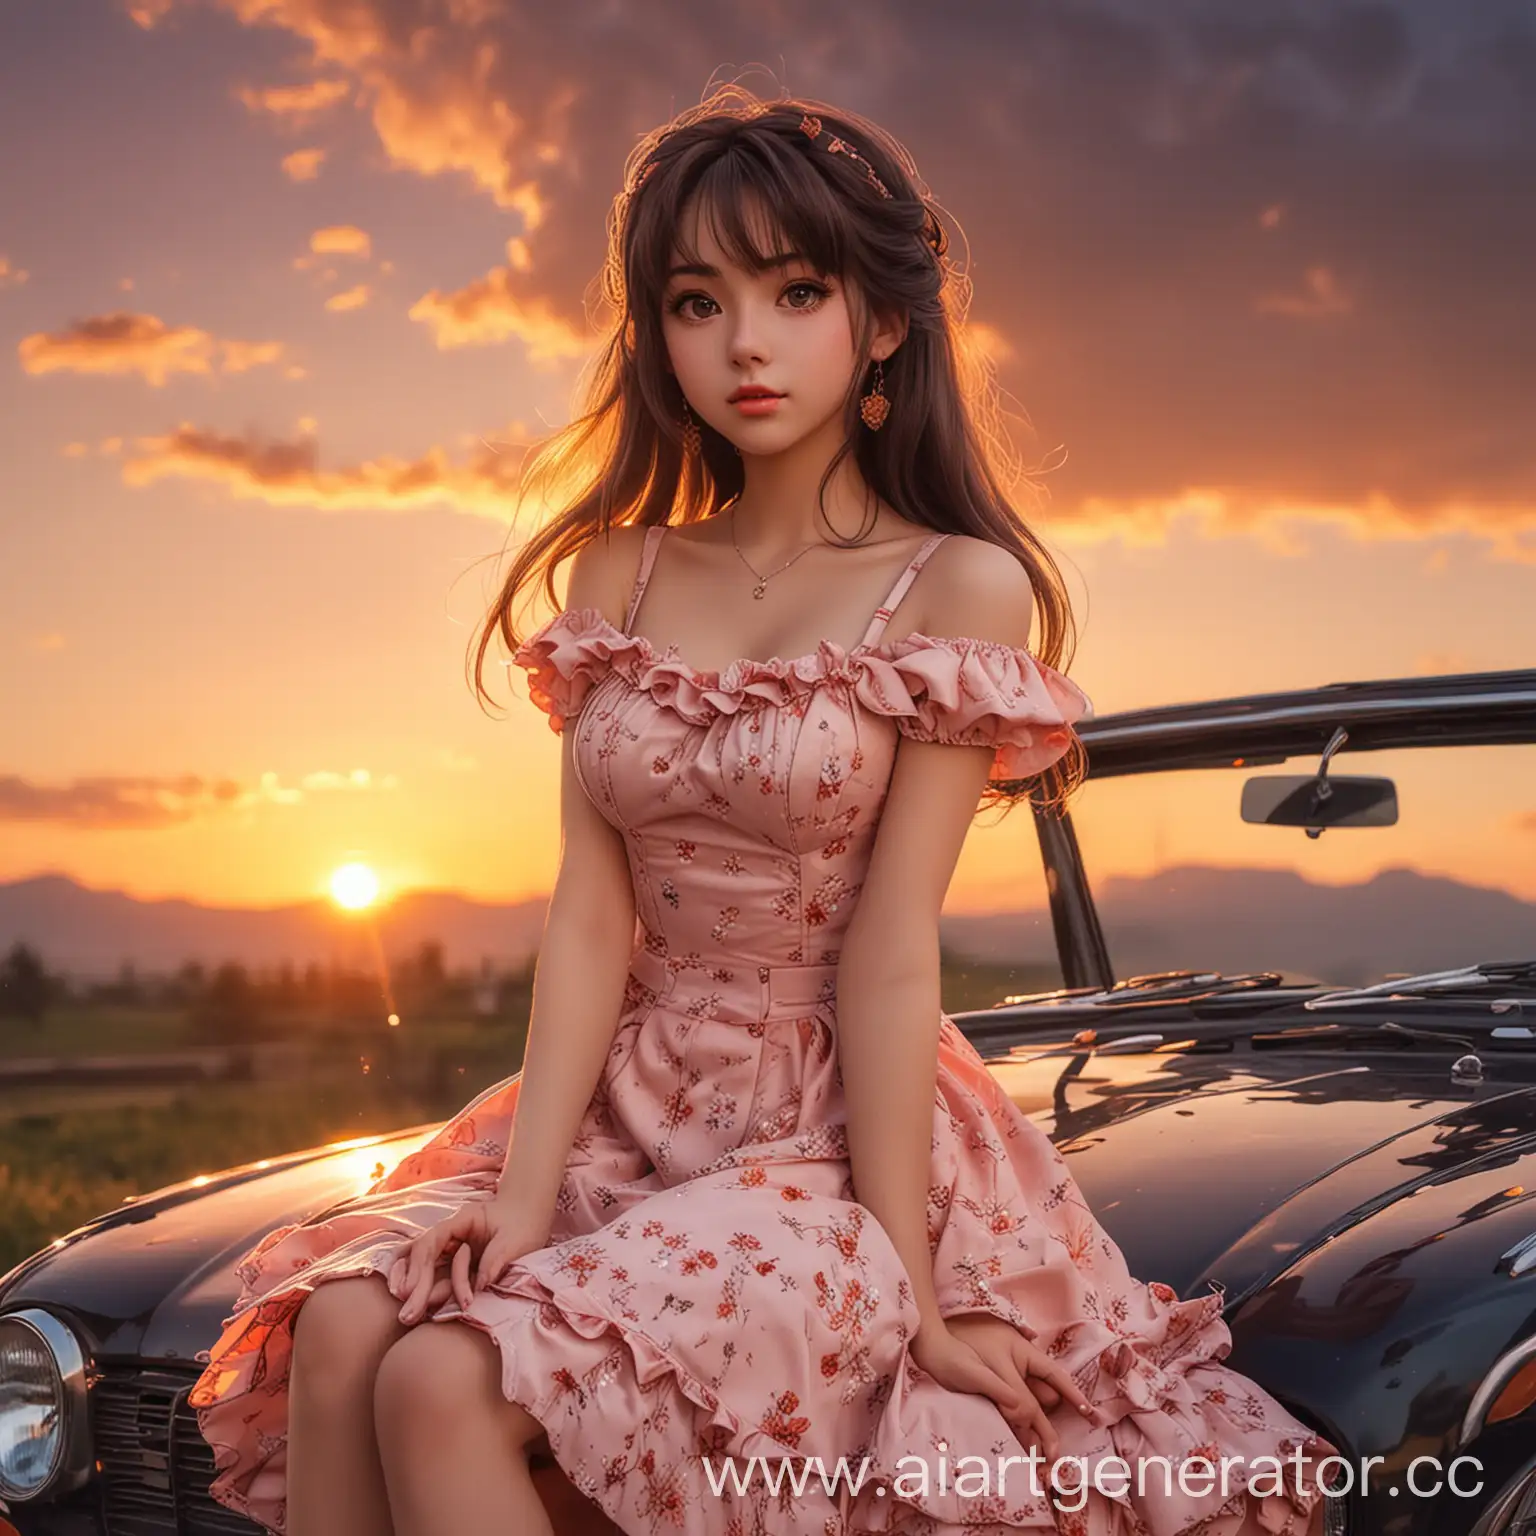 Anime-Girl-Sitting-on-Car-Hood-at-Sunset-Retro-Style